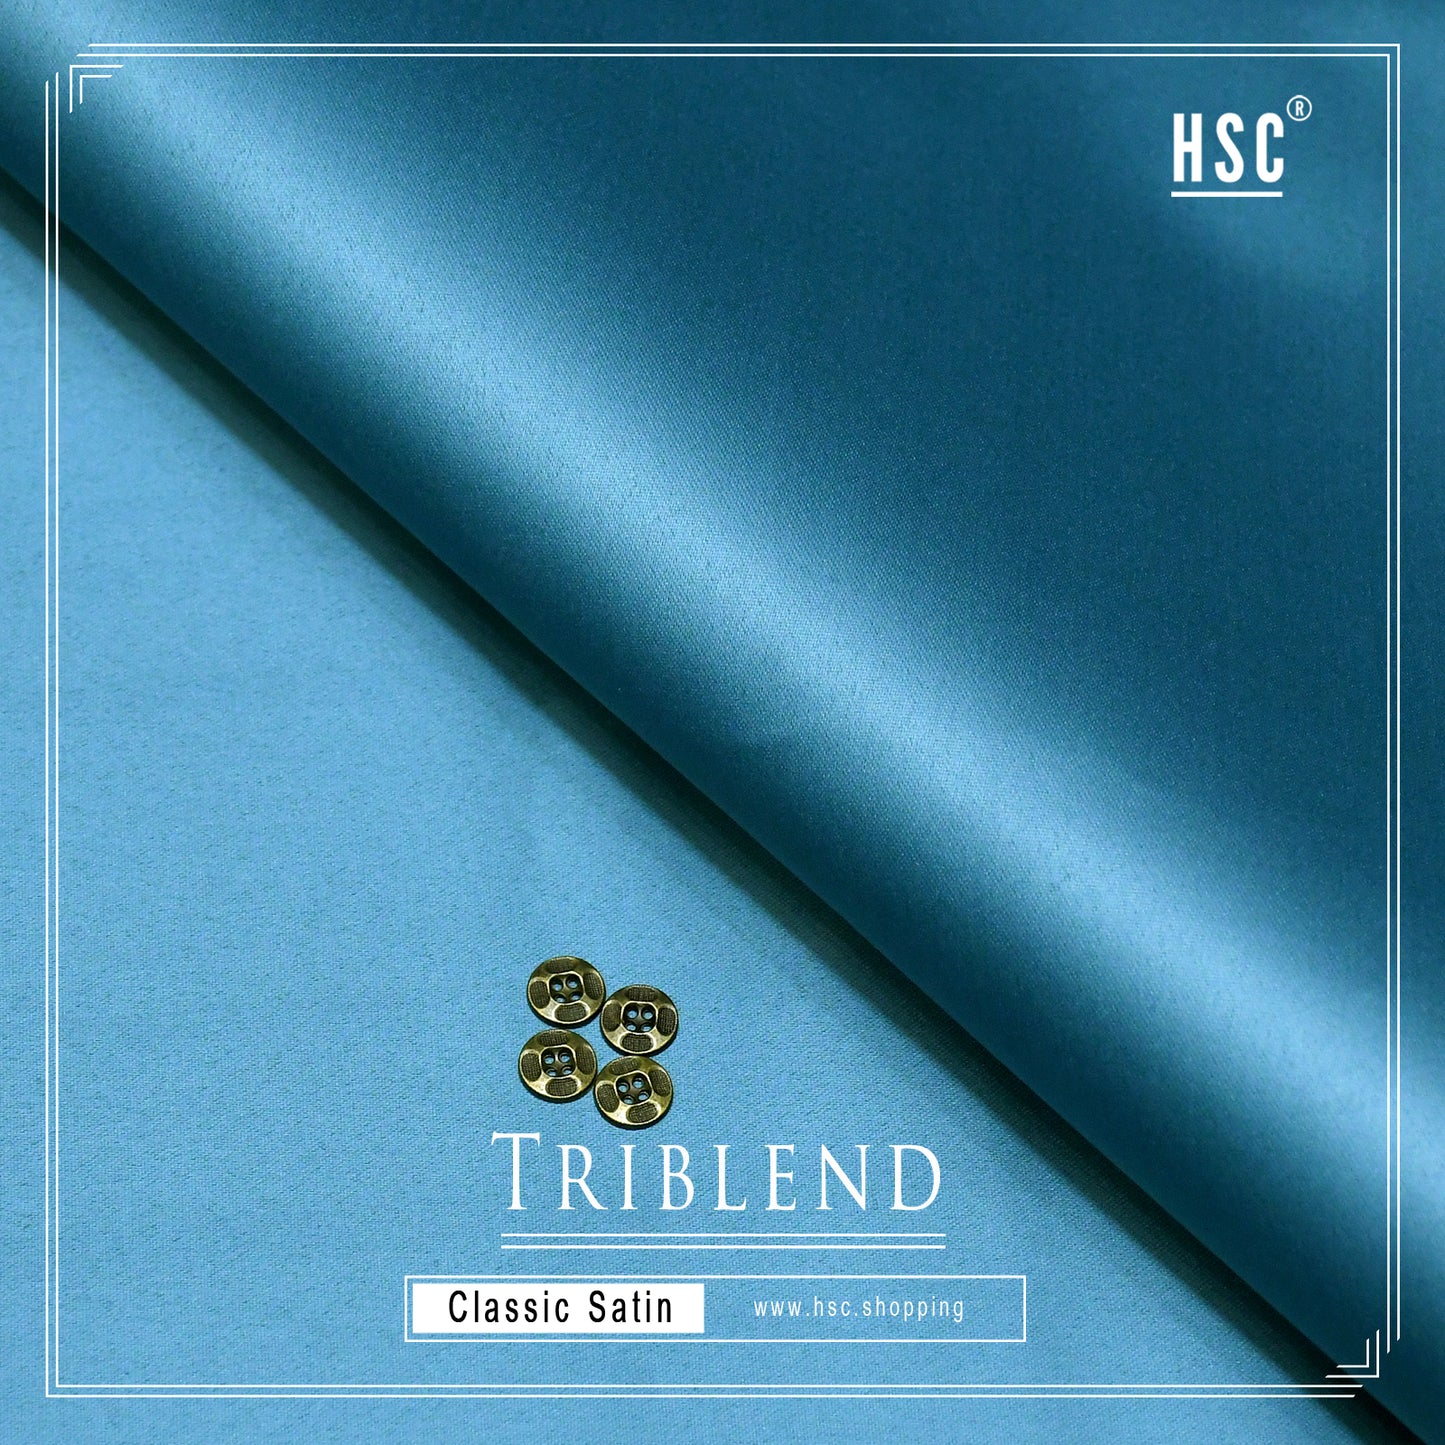 Buy 1 Get 1 Free Triblend Classic Satin - TS6 HSC